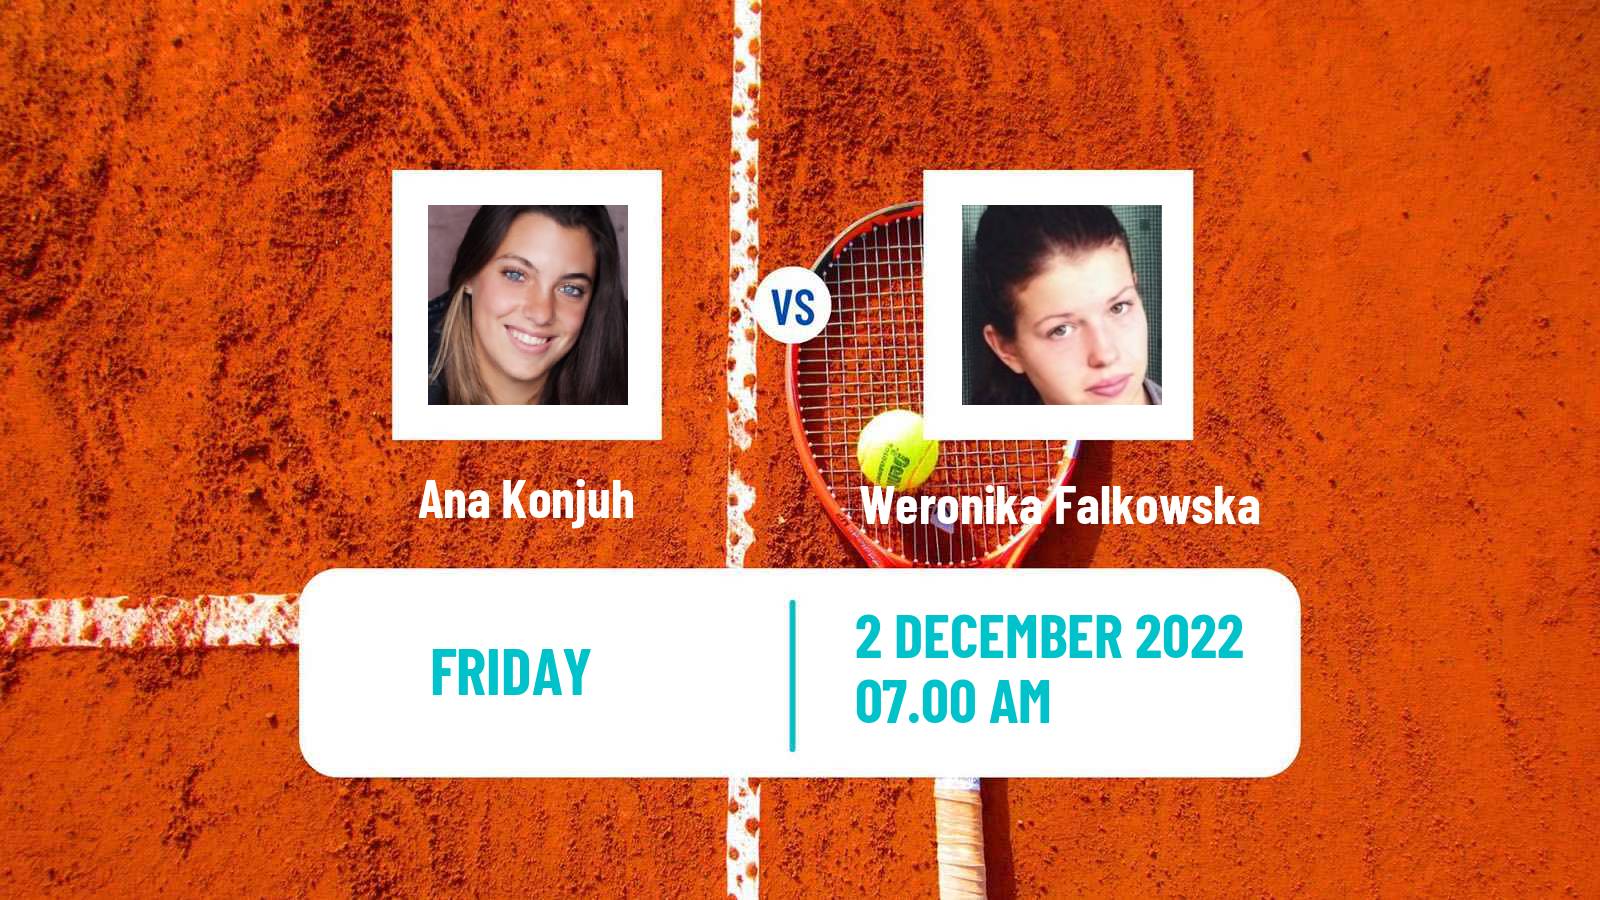 Tennis ATP Challenger Ana Konjuh - Weronika Falkowska